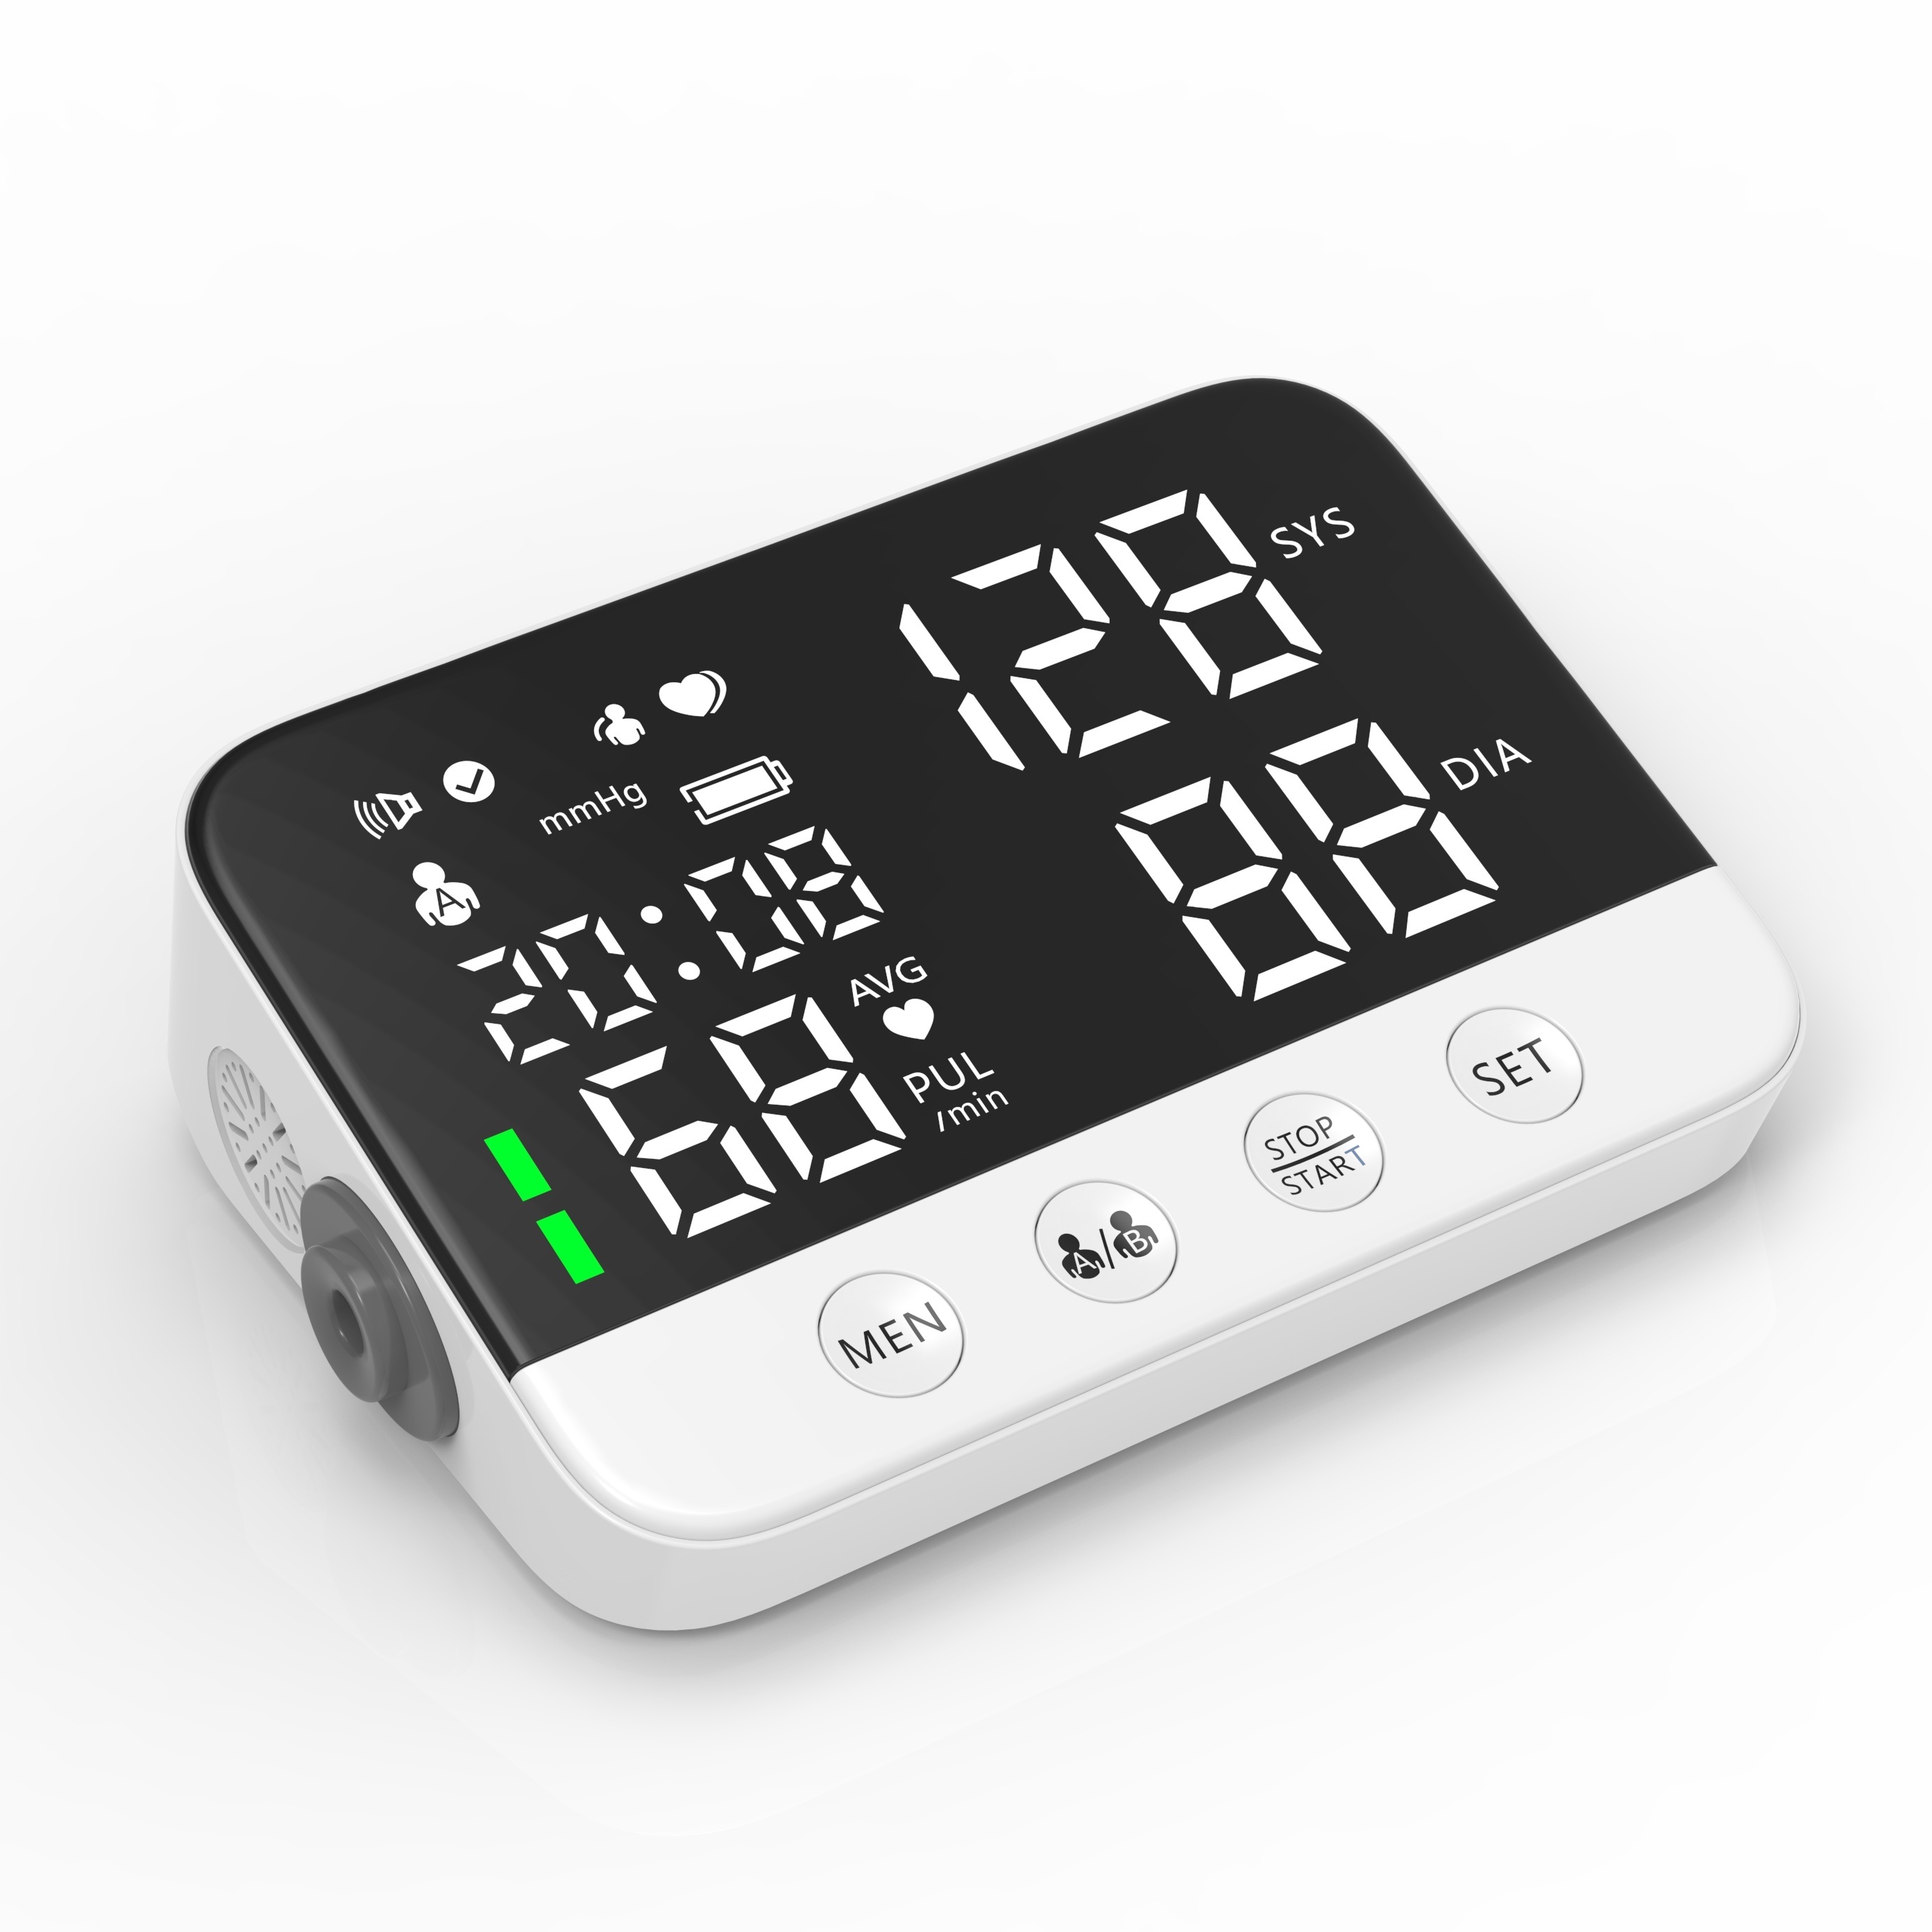 LAZLE Blood Pressure Monitor - Automatic Upper Arm Machine & Accurate  Adjustable